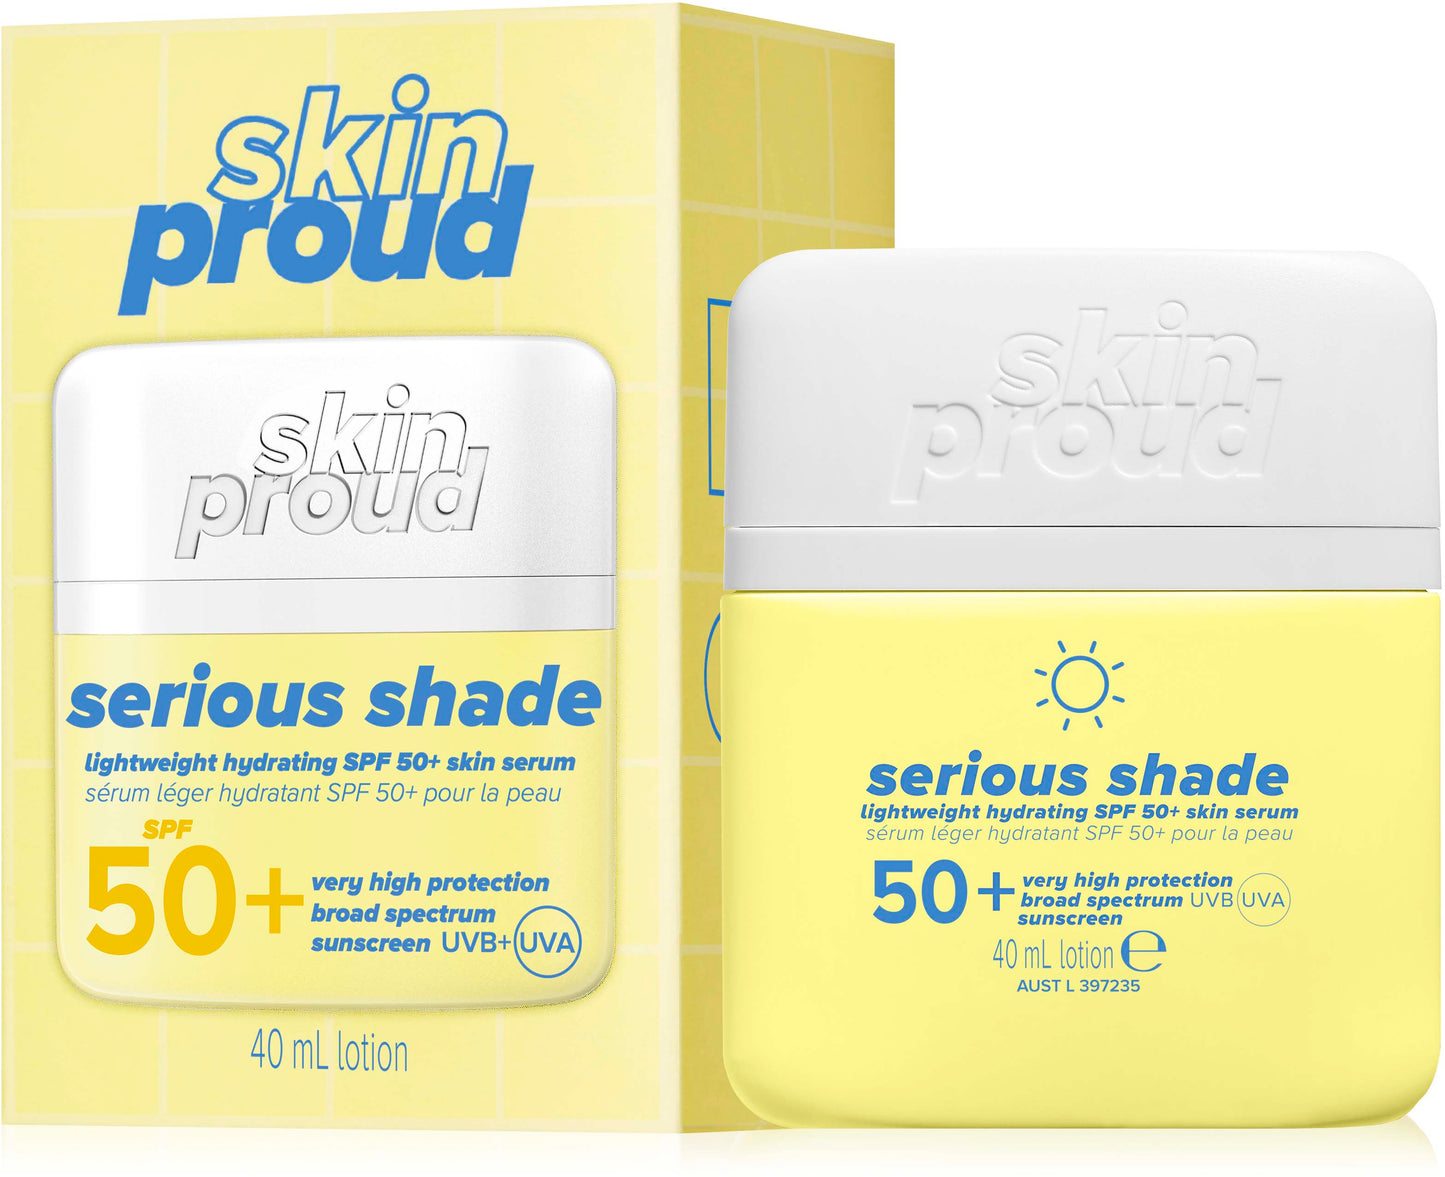 Skinproud serious shade SPF 50+